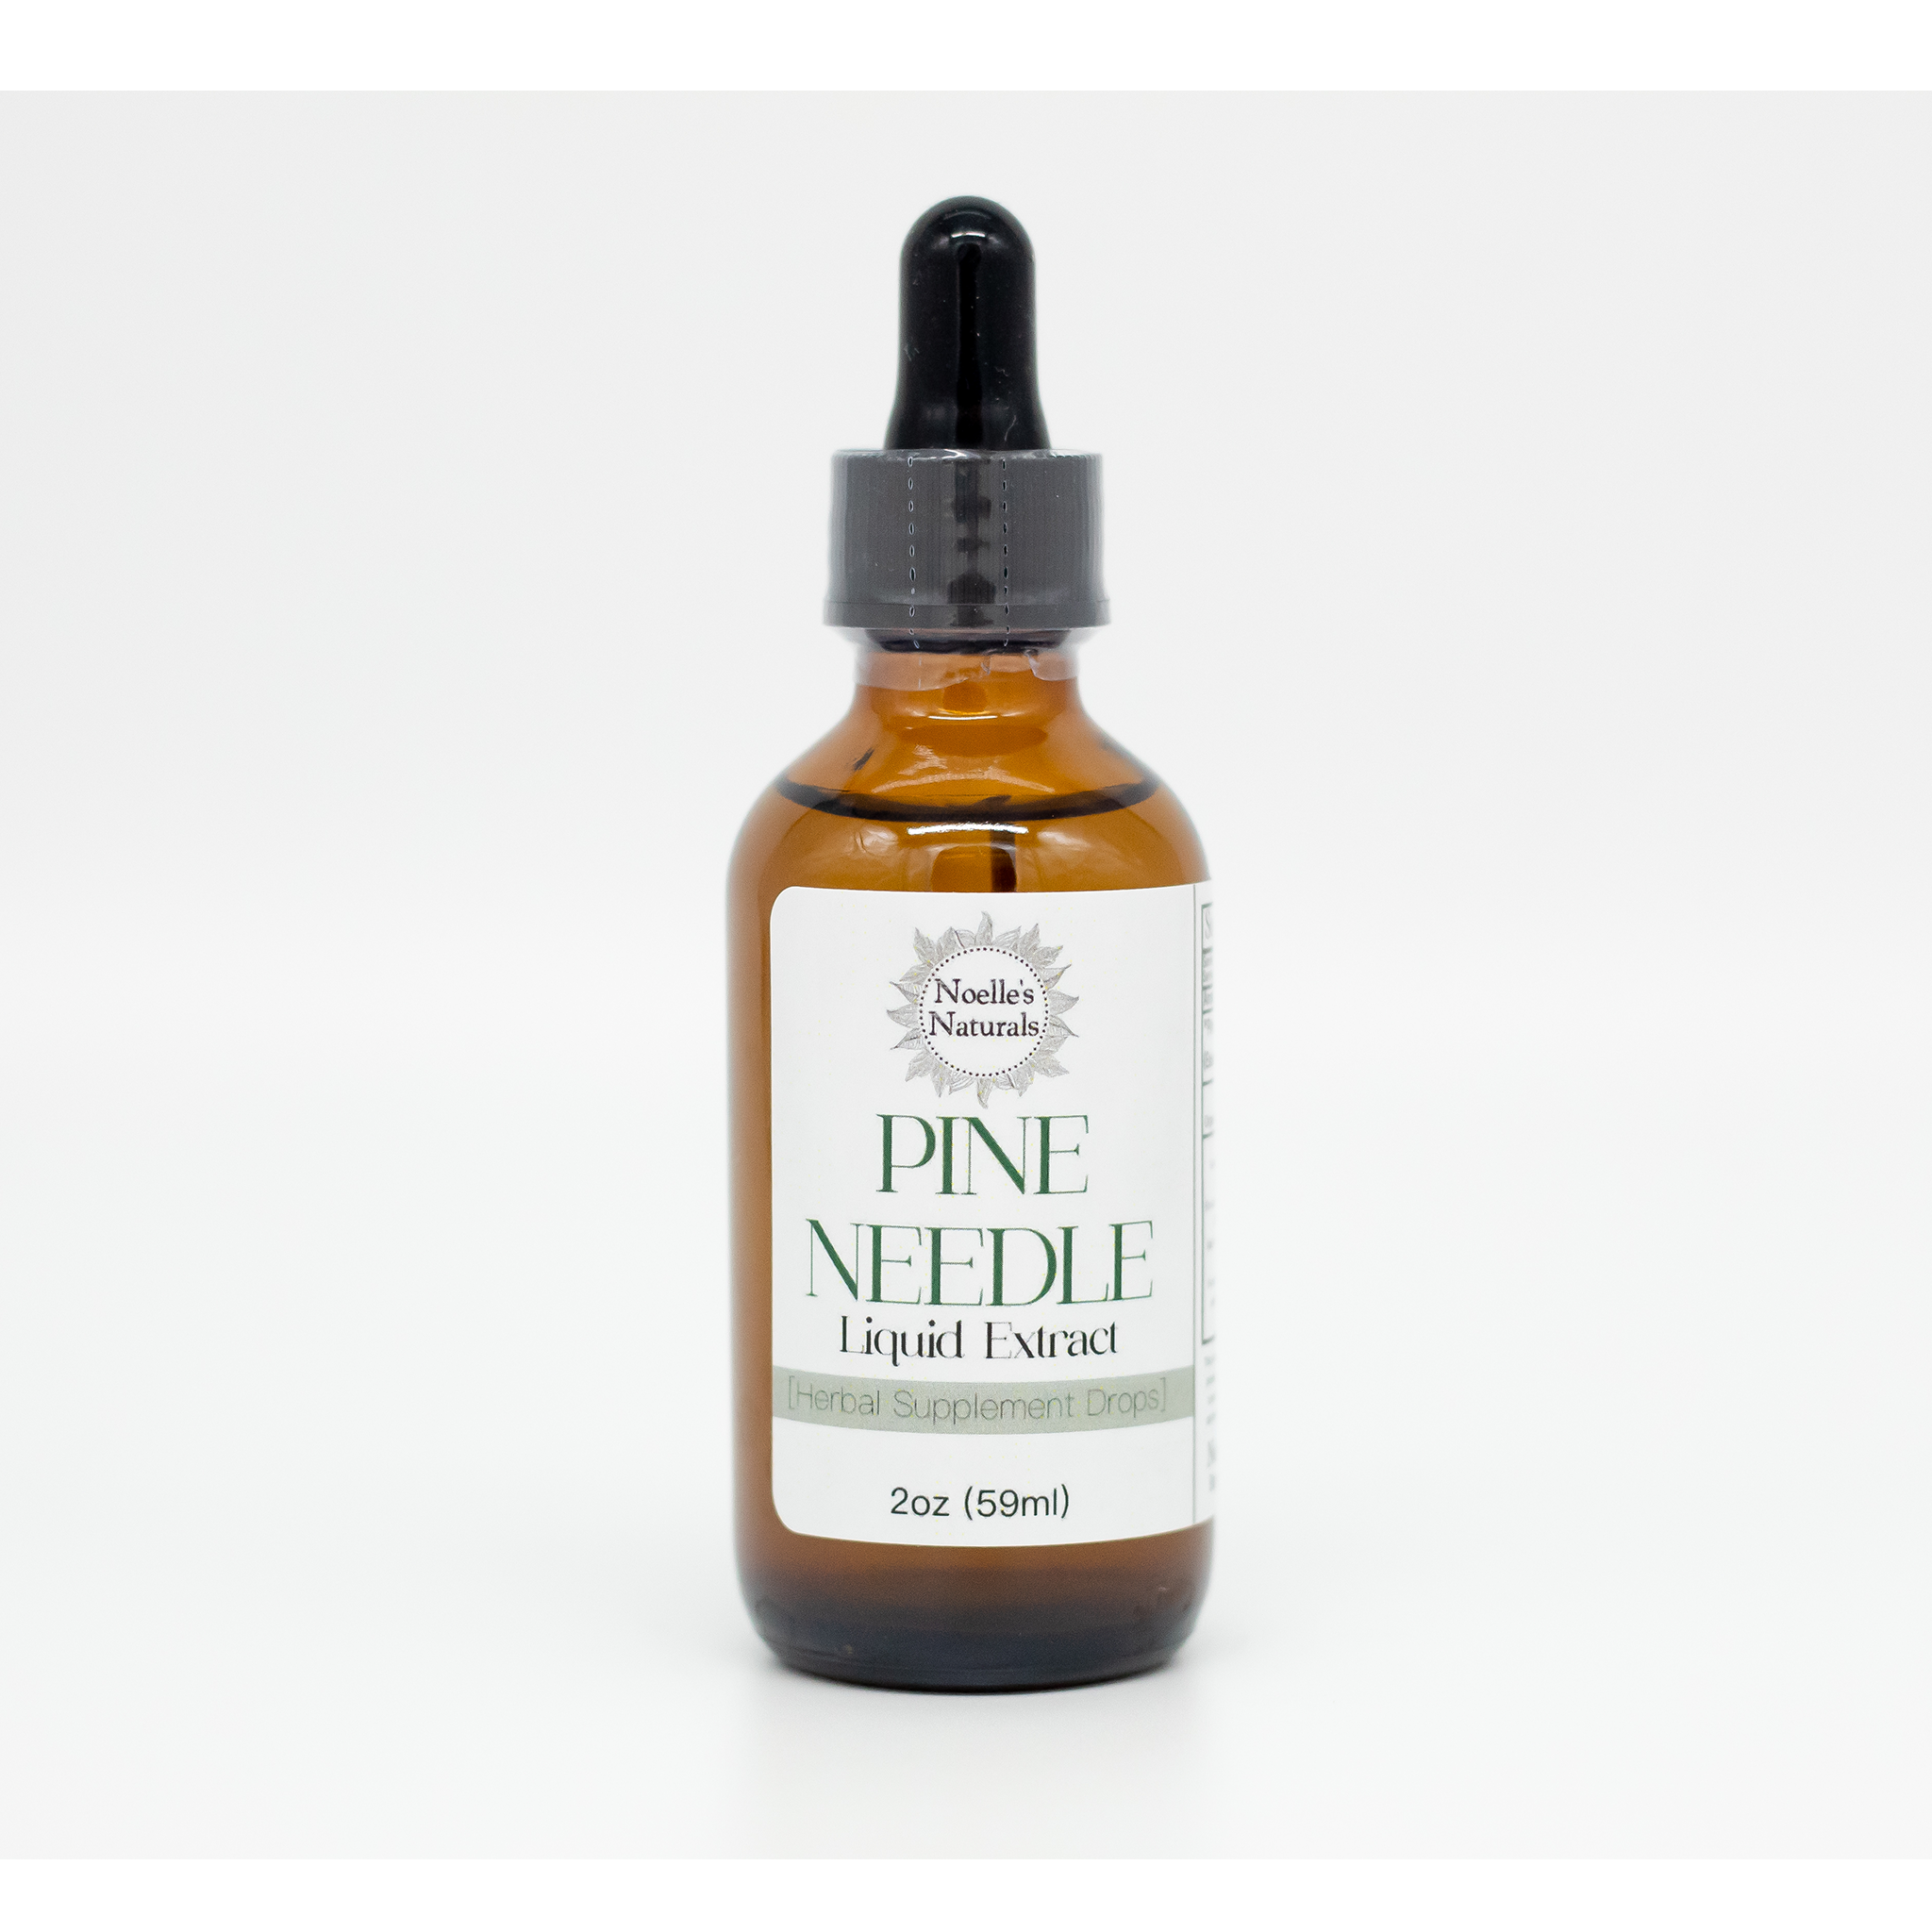 Pine Needle Extract - Supplement Drops - 2oz